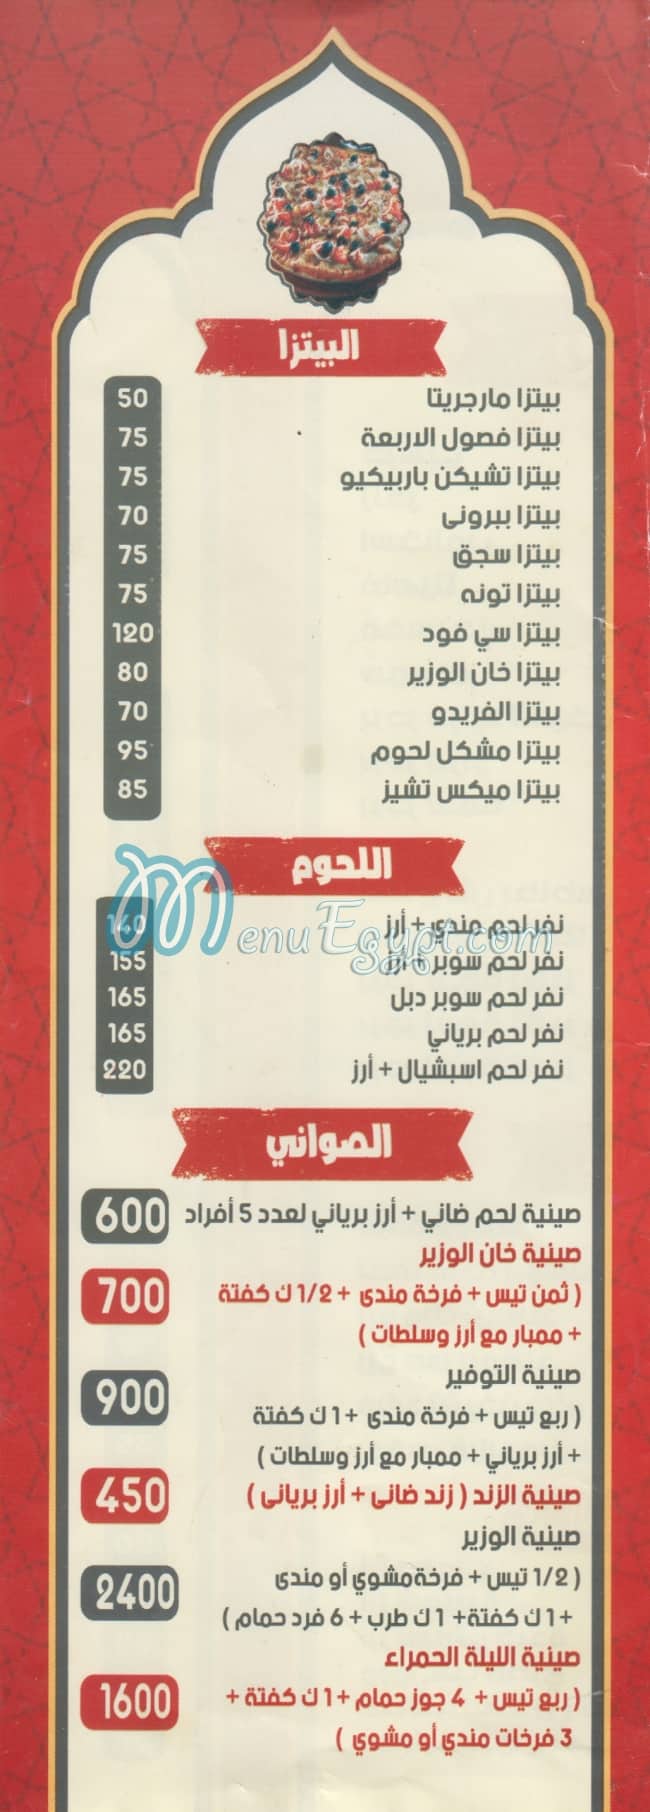 KHan El Wazear menu prices